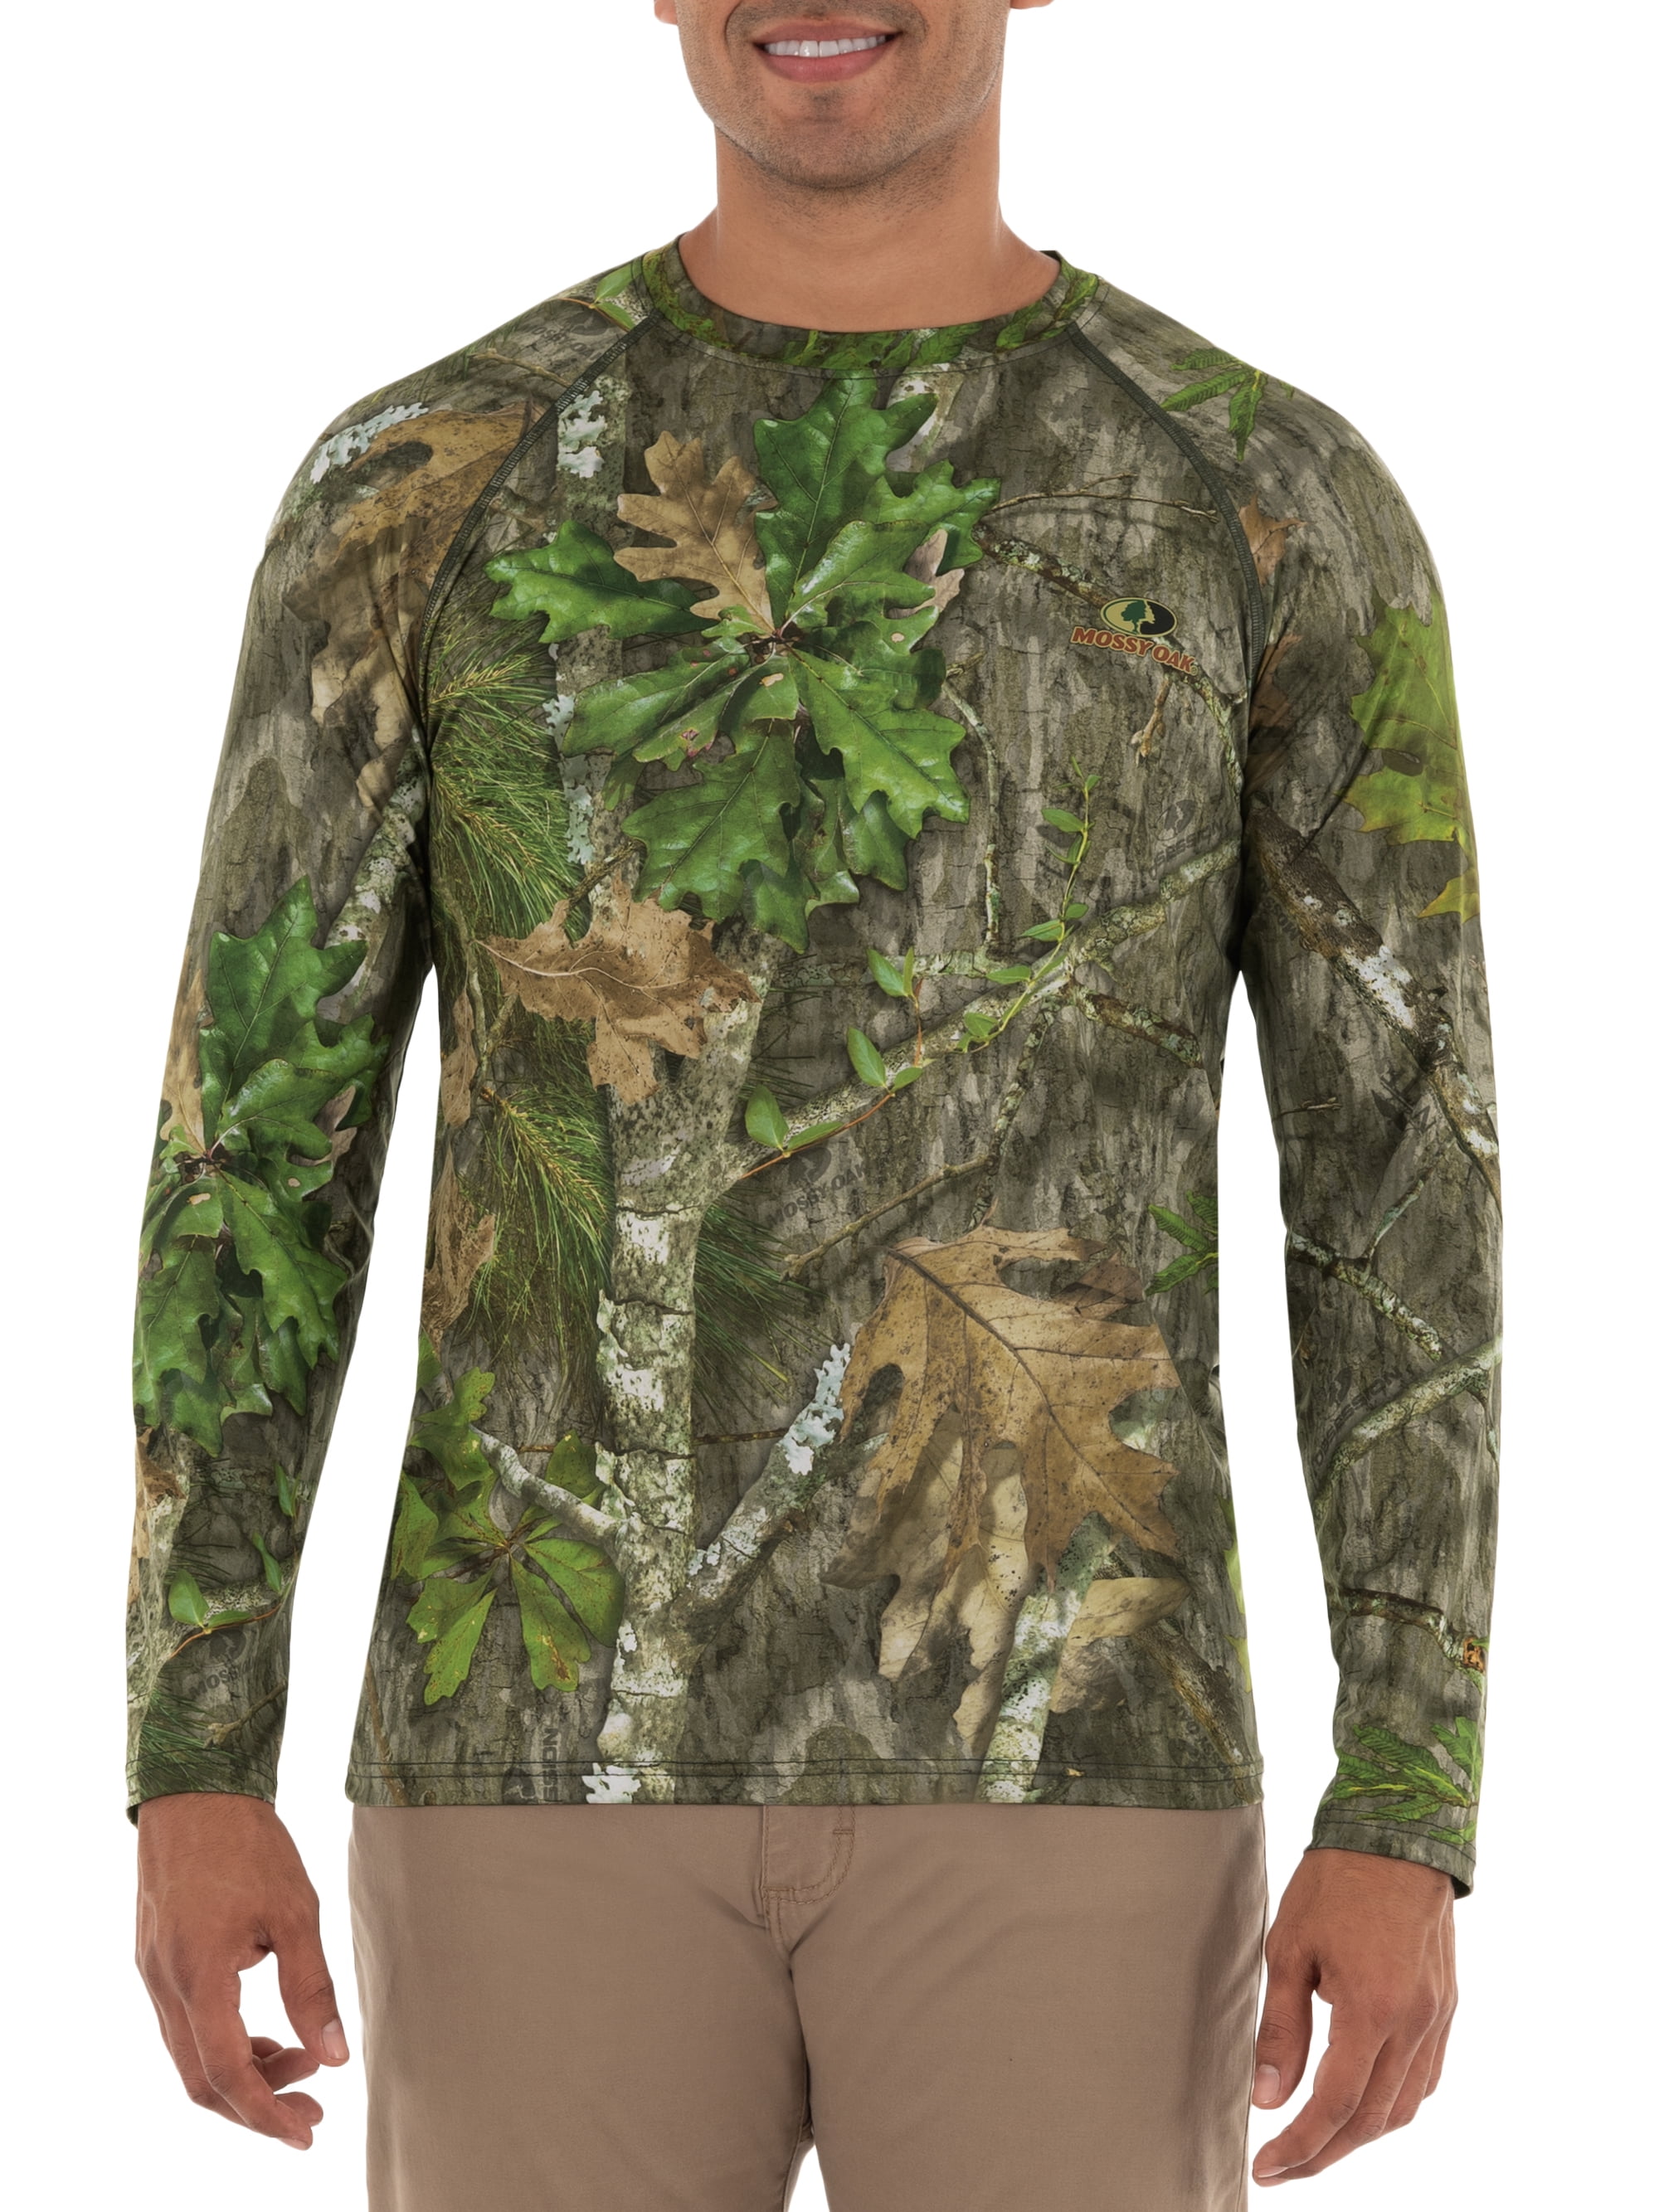 New Ladies MOSSY OAK Break-Up Country Long Sleeve Shirt S M XL 2XL Hunting Camo 